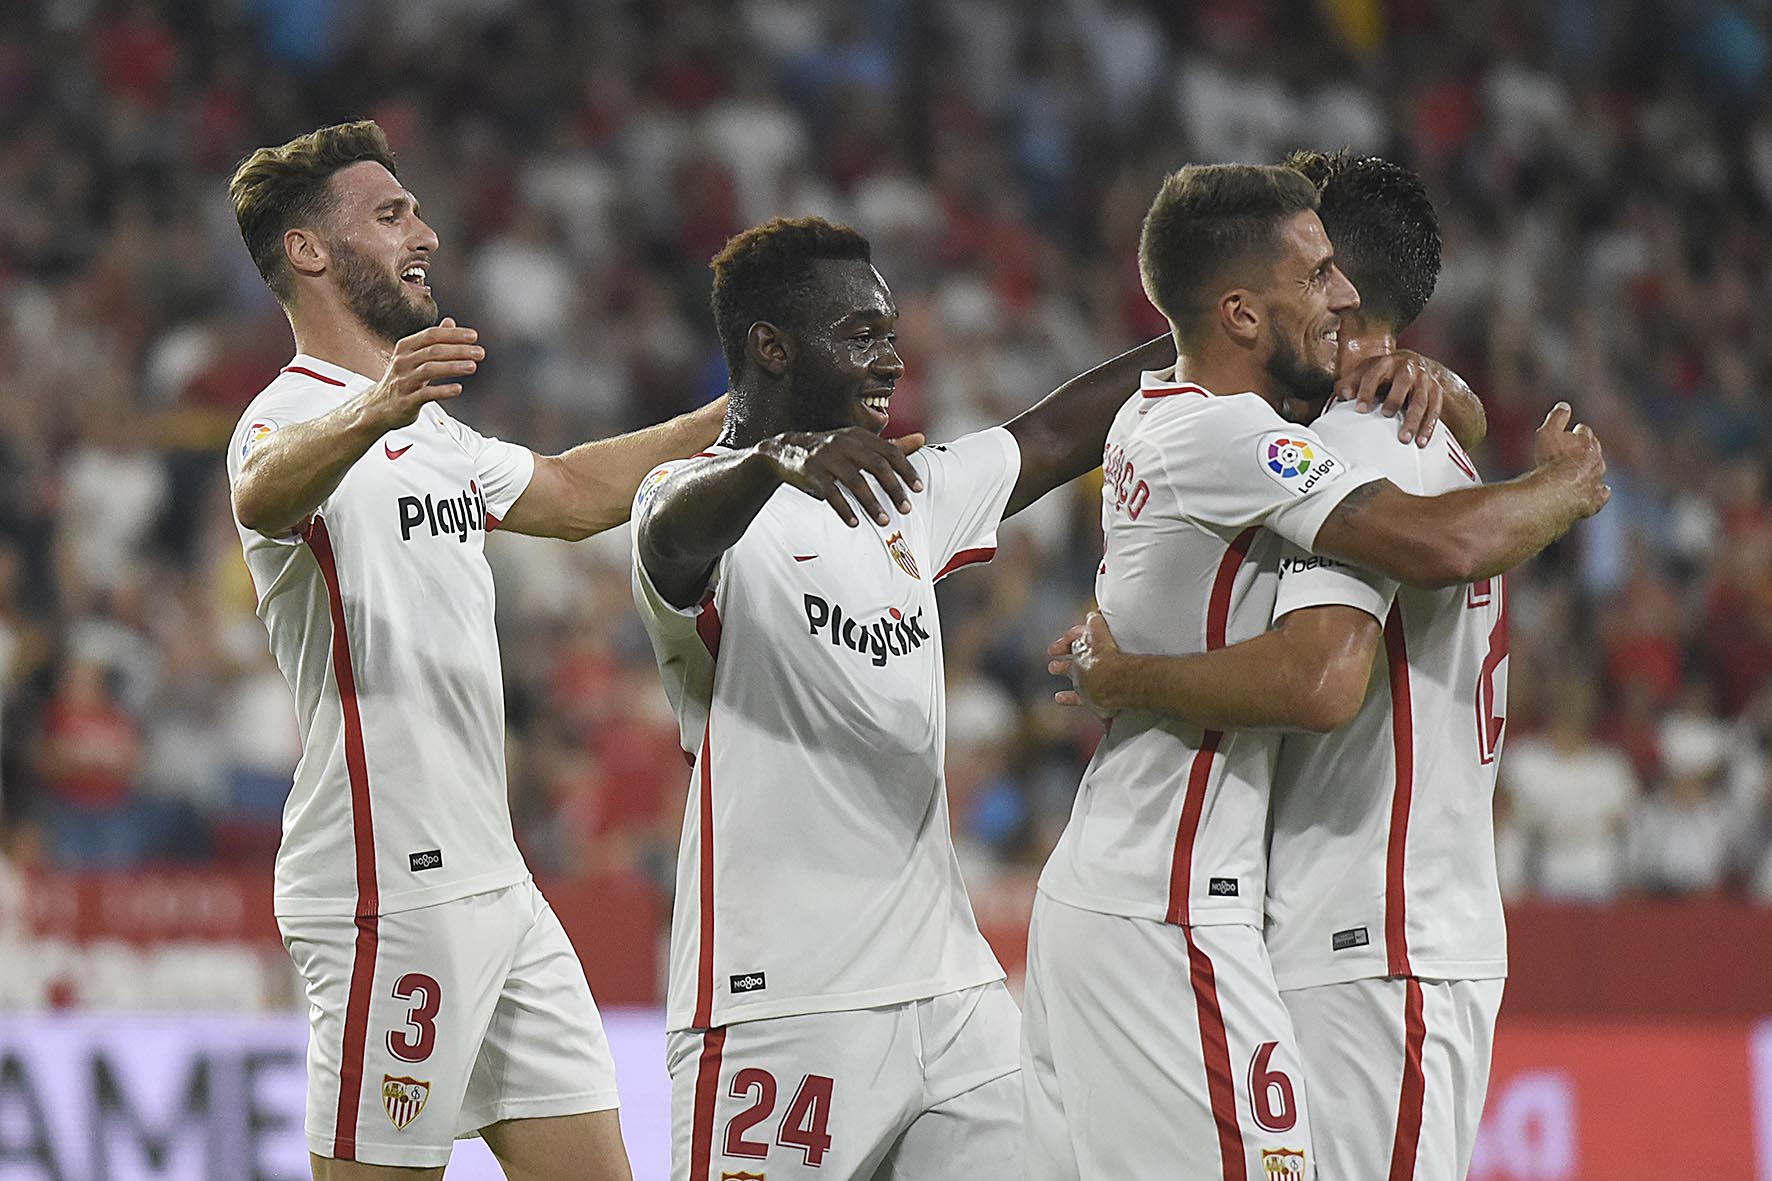 Sevilla's players celebrate a goal